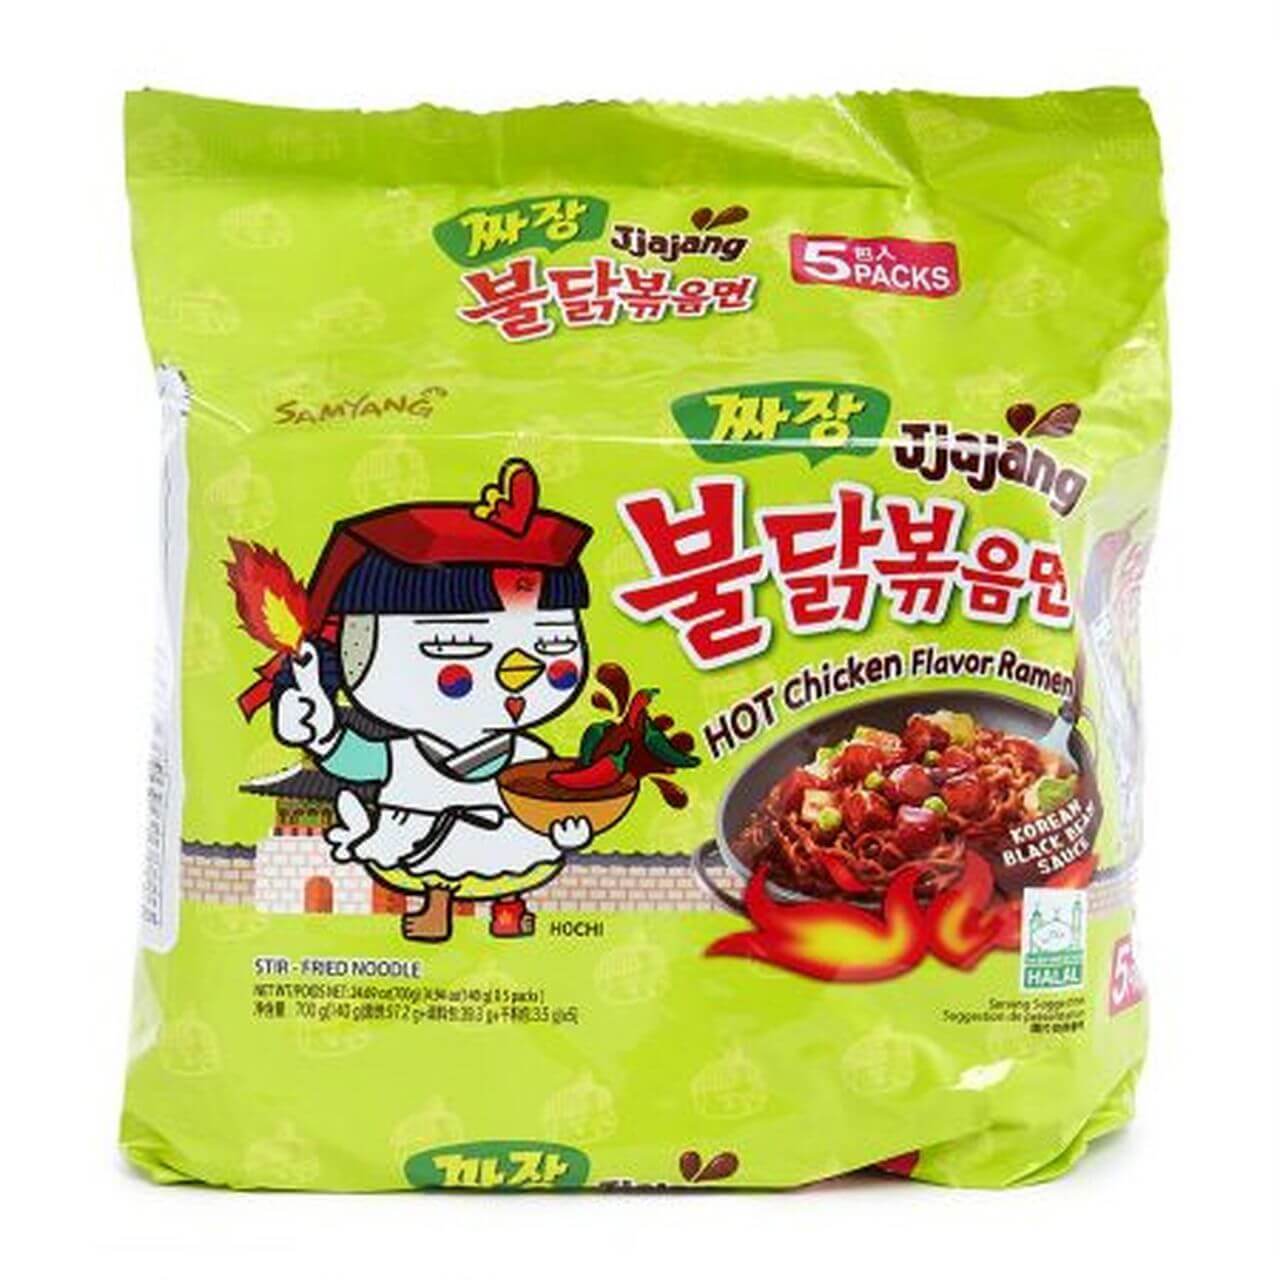 Samyang Jjajang Hot Chicken Flavored Ramen - 5 Pack-1